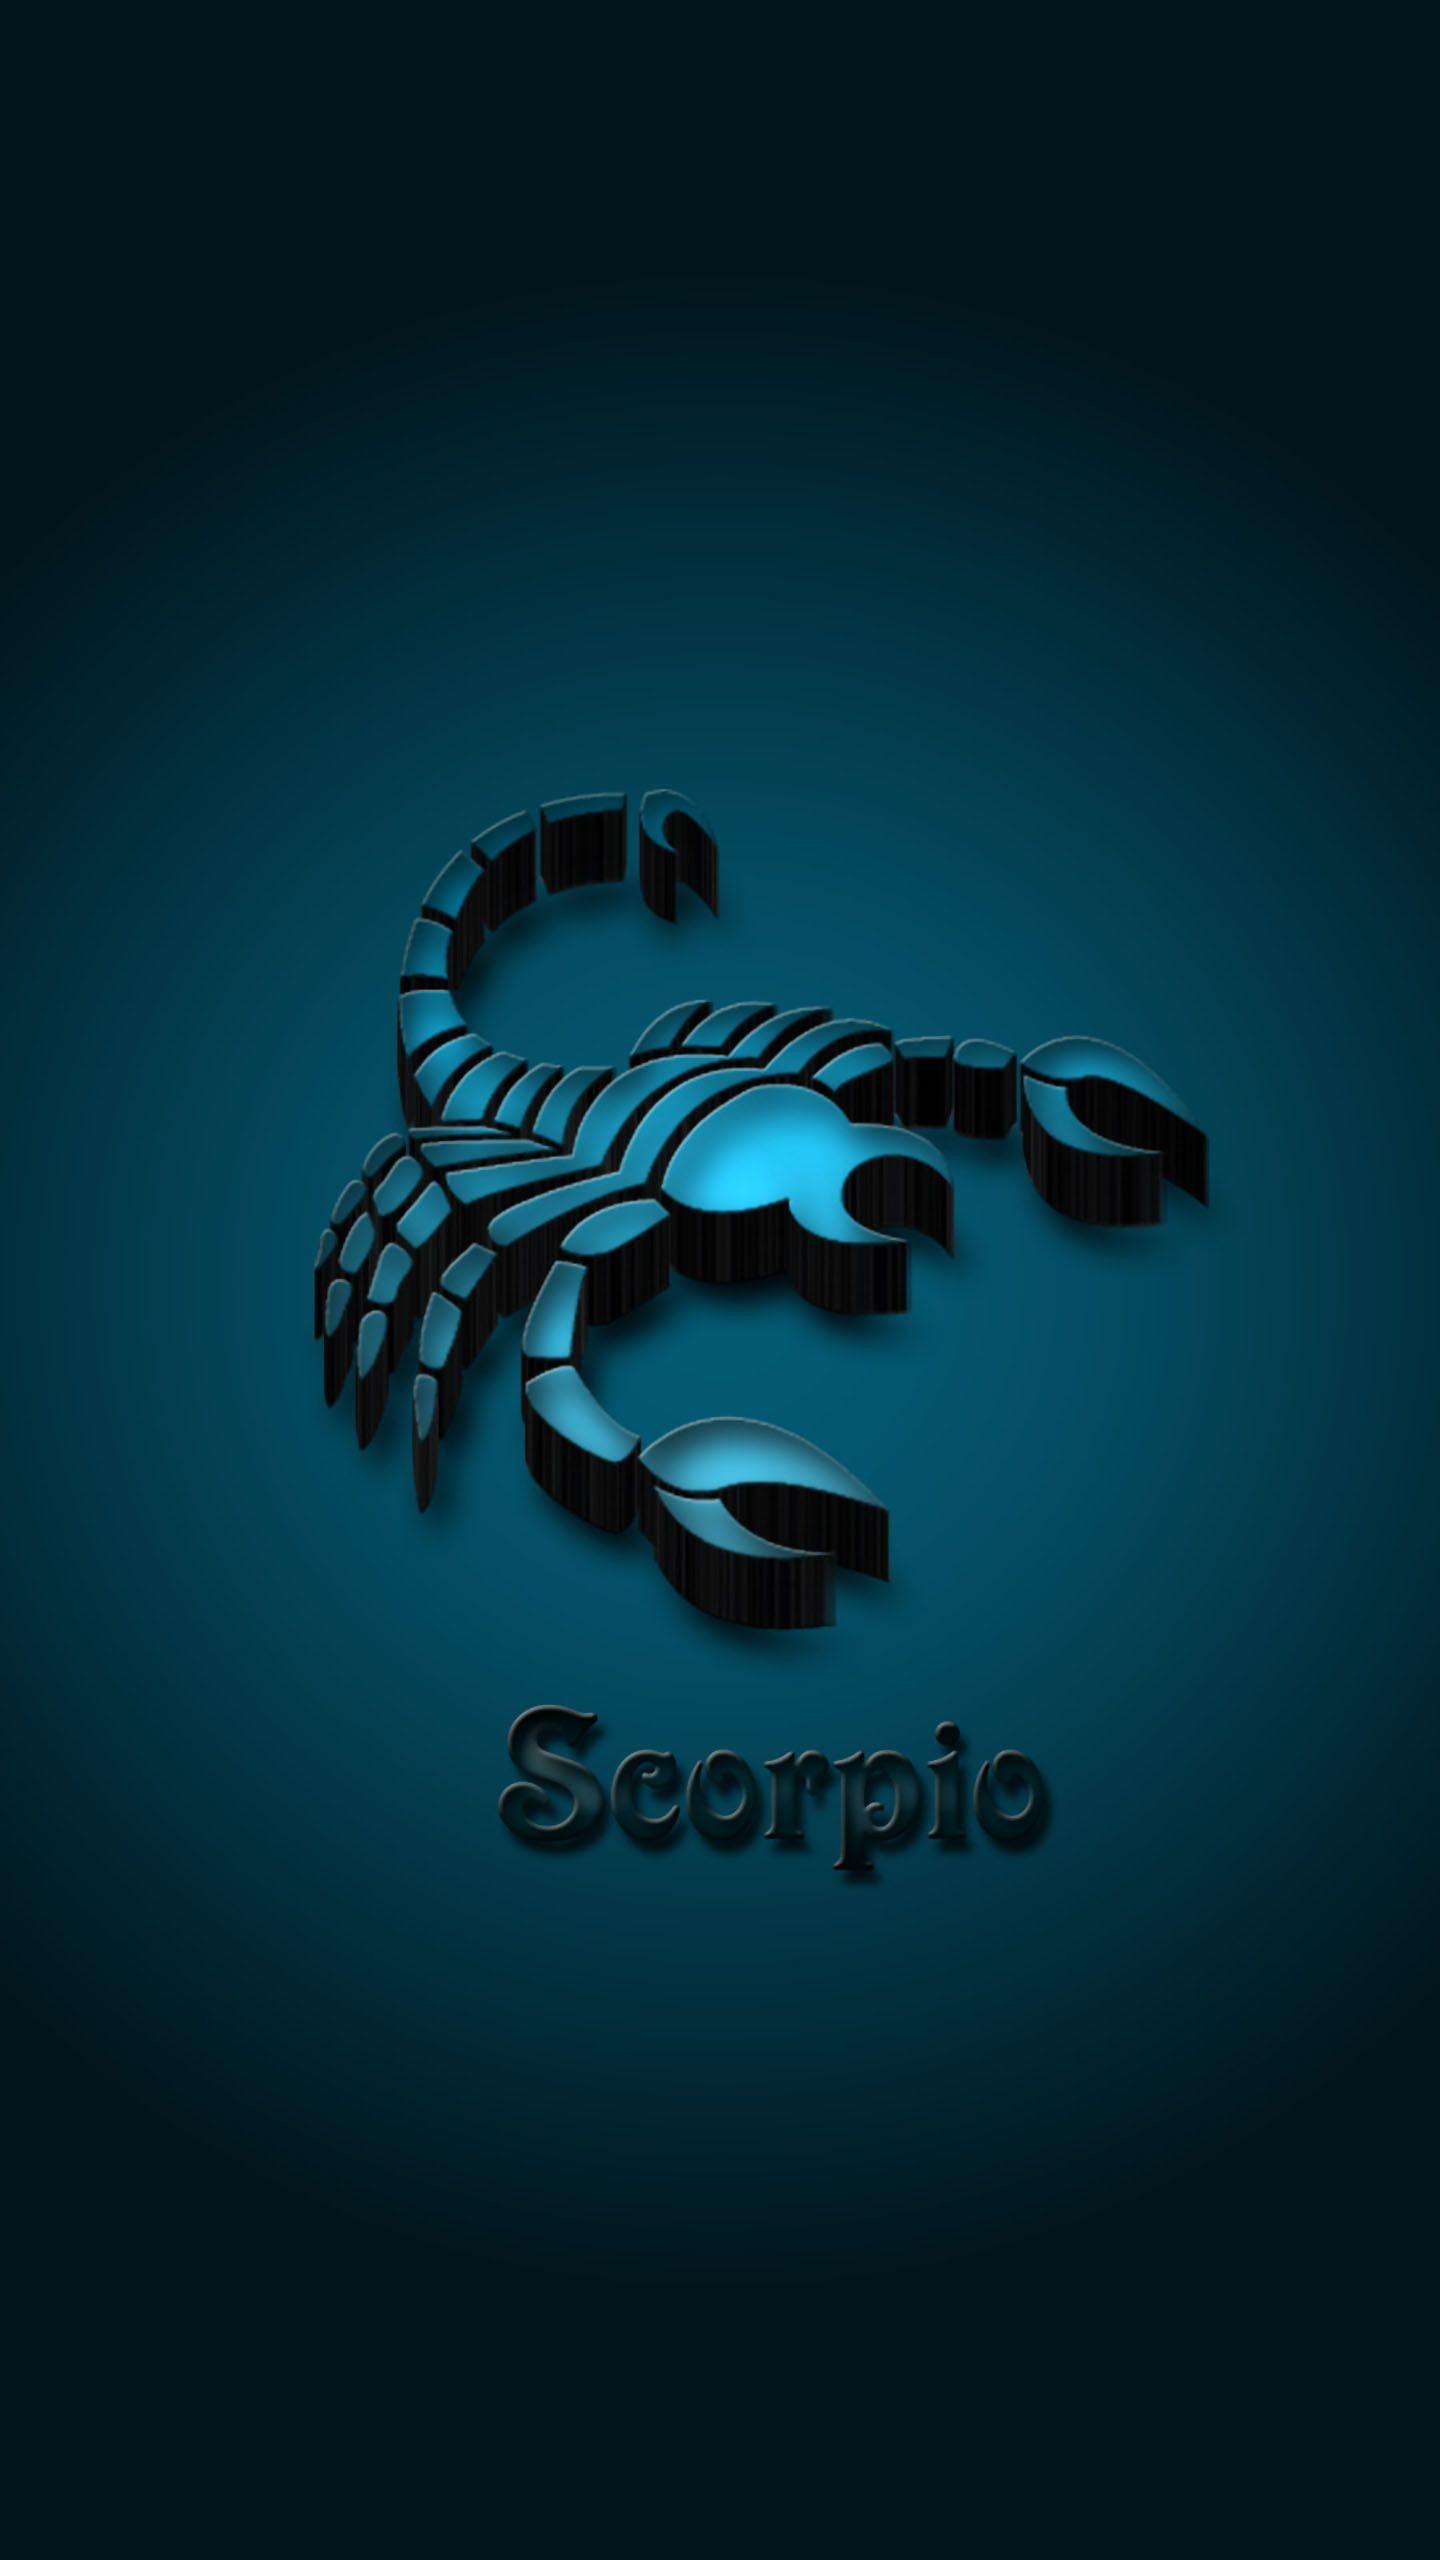 Pin on Scorpion Wallpaper